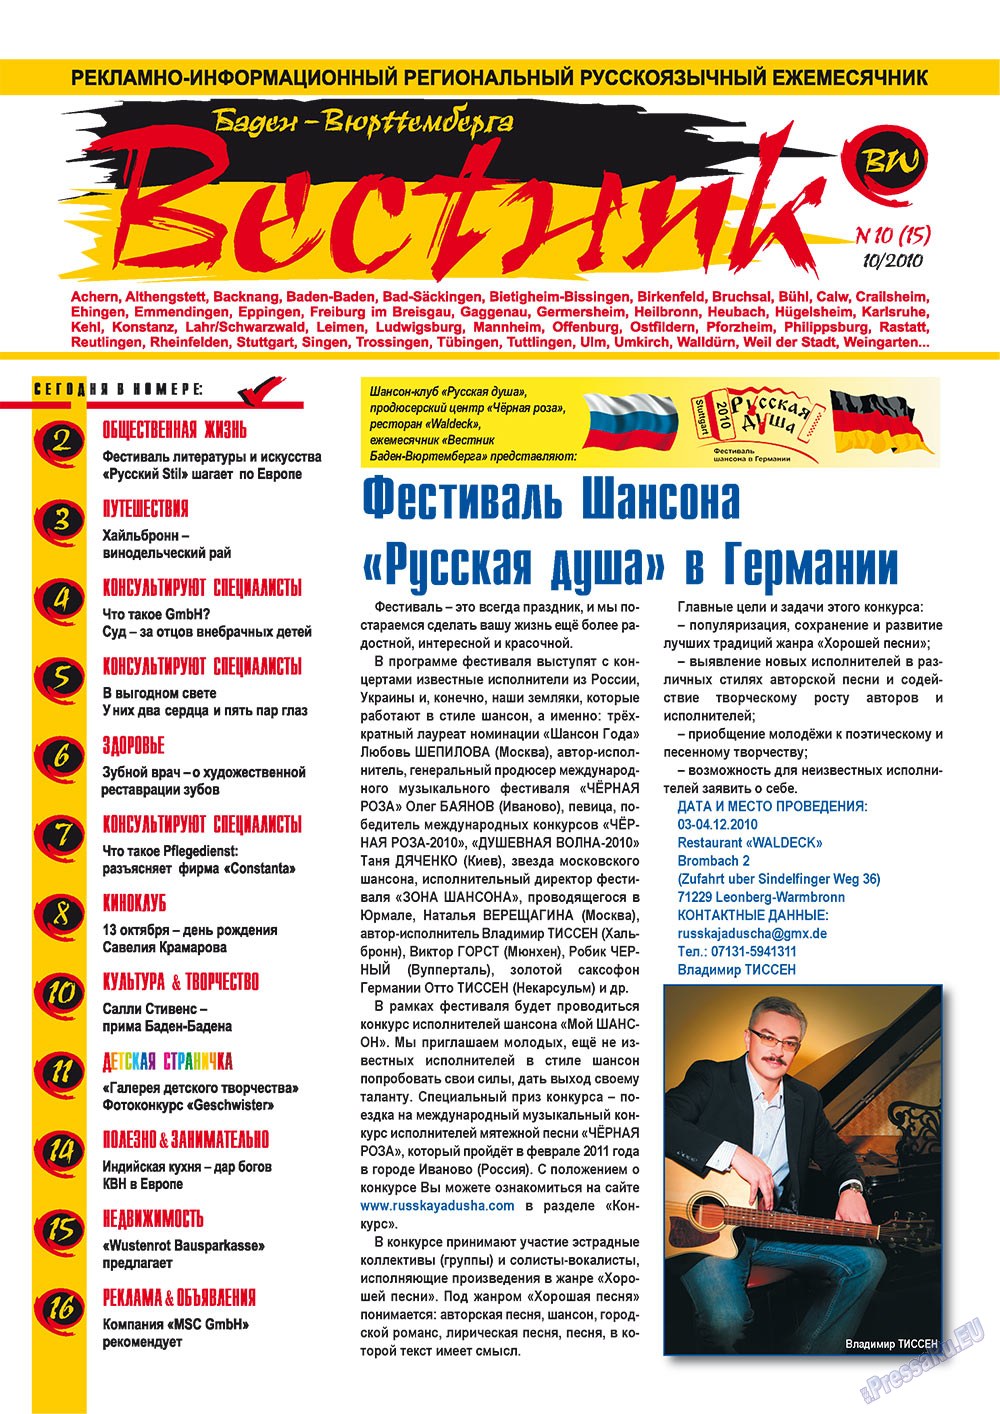 Вестник-info (журнал). 2010 год, номер 10, стр. 1